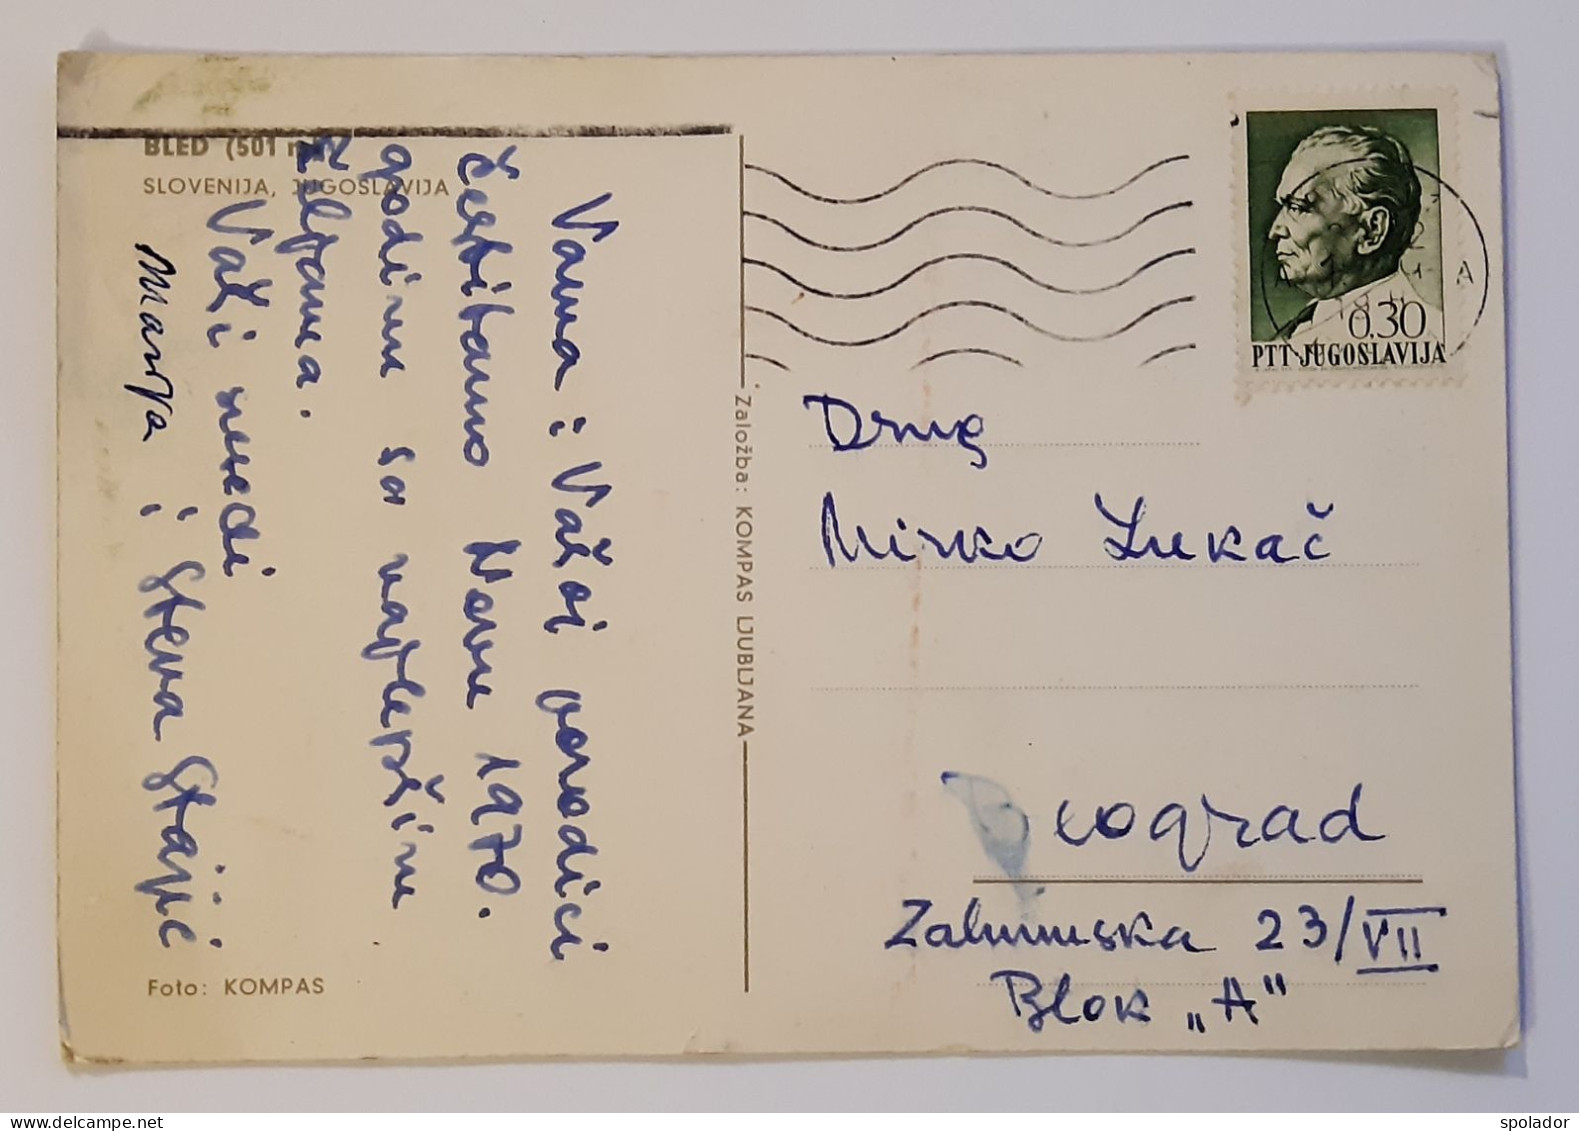 Ex-Yugoslavia-Vintage Photo Postcard-SLOVENIA-BLED-60s-used With Stamp-#11 - Jugoslavia